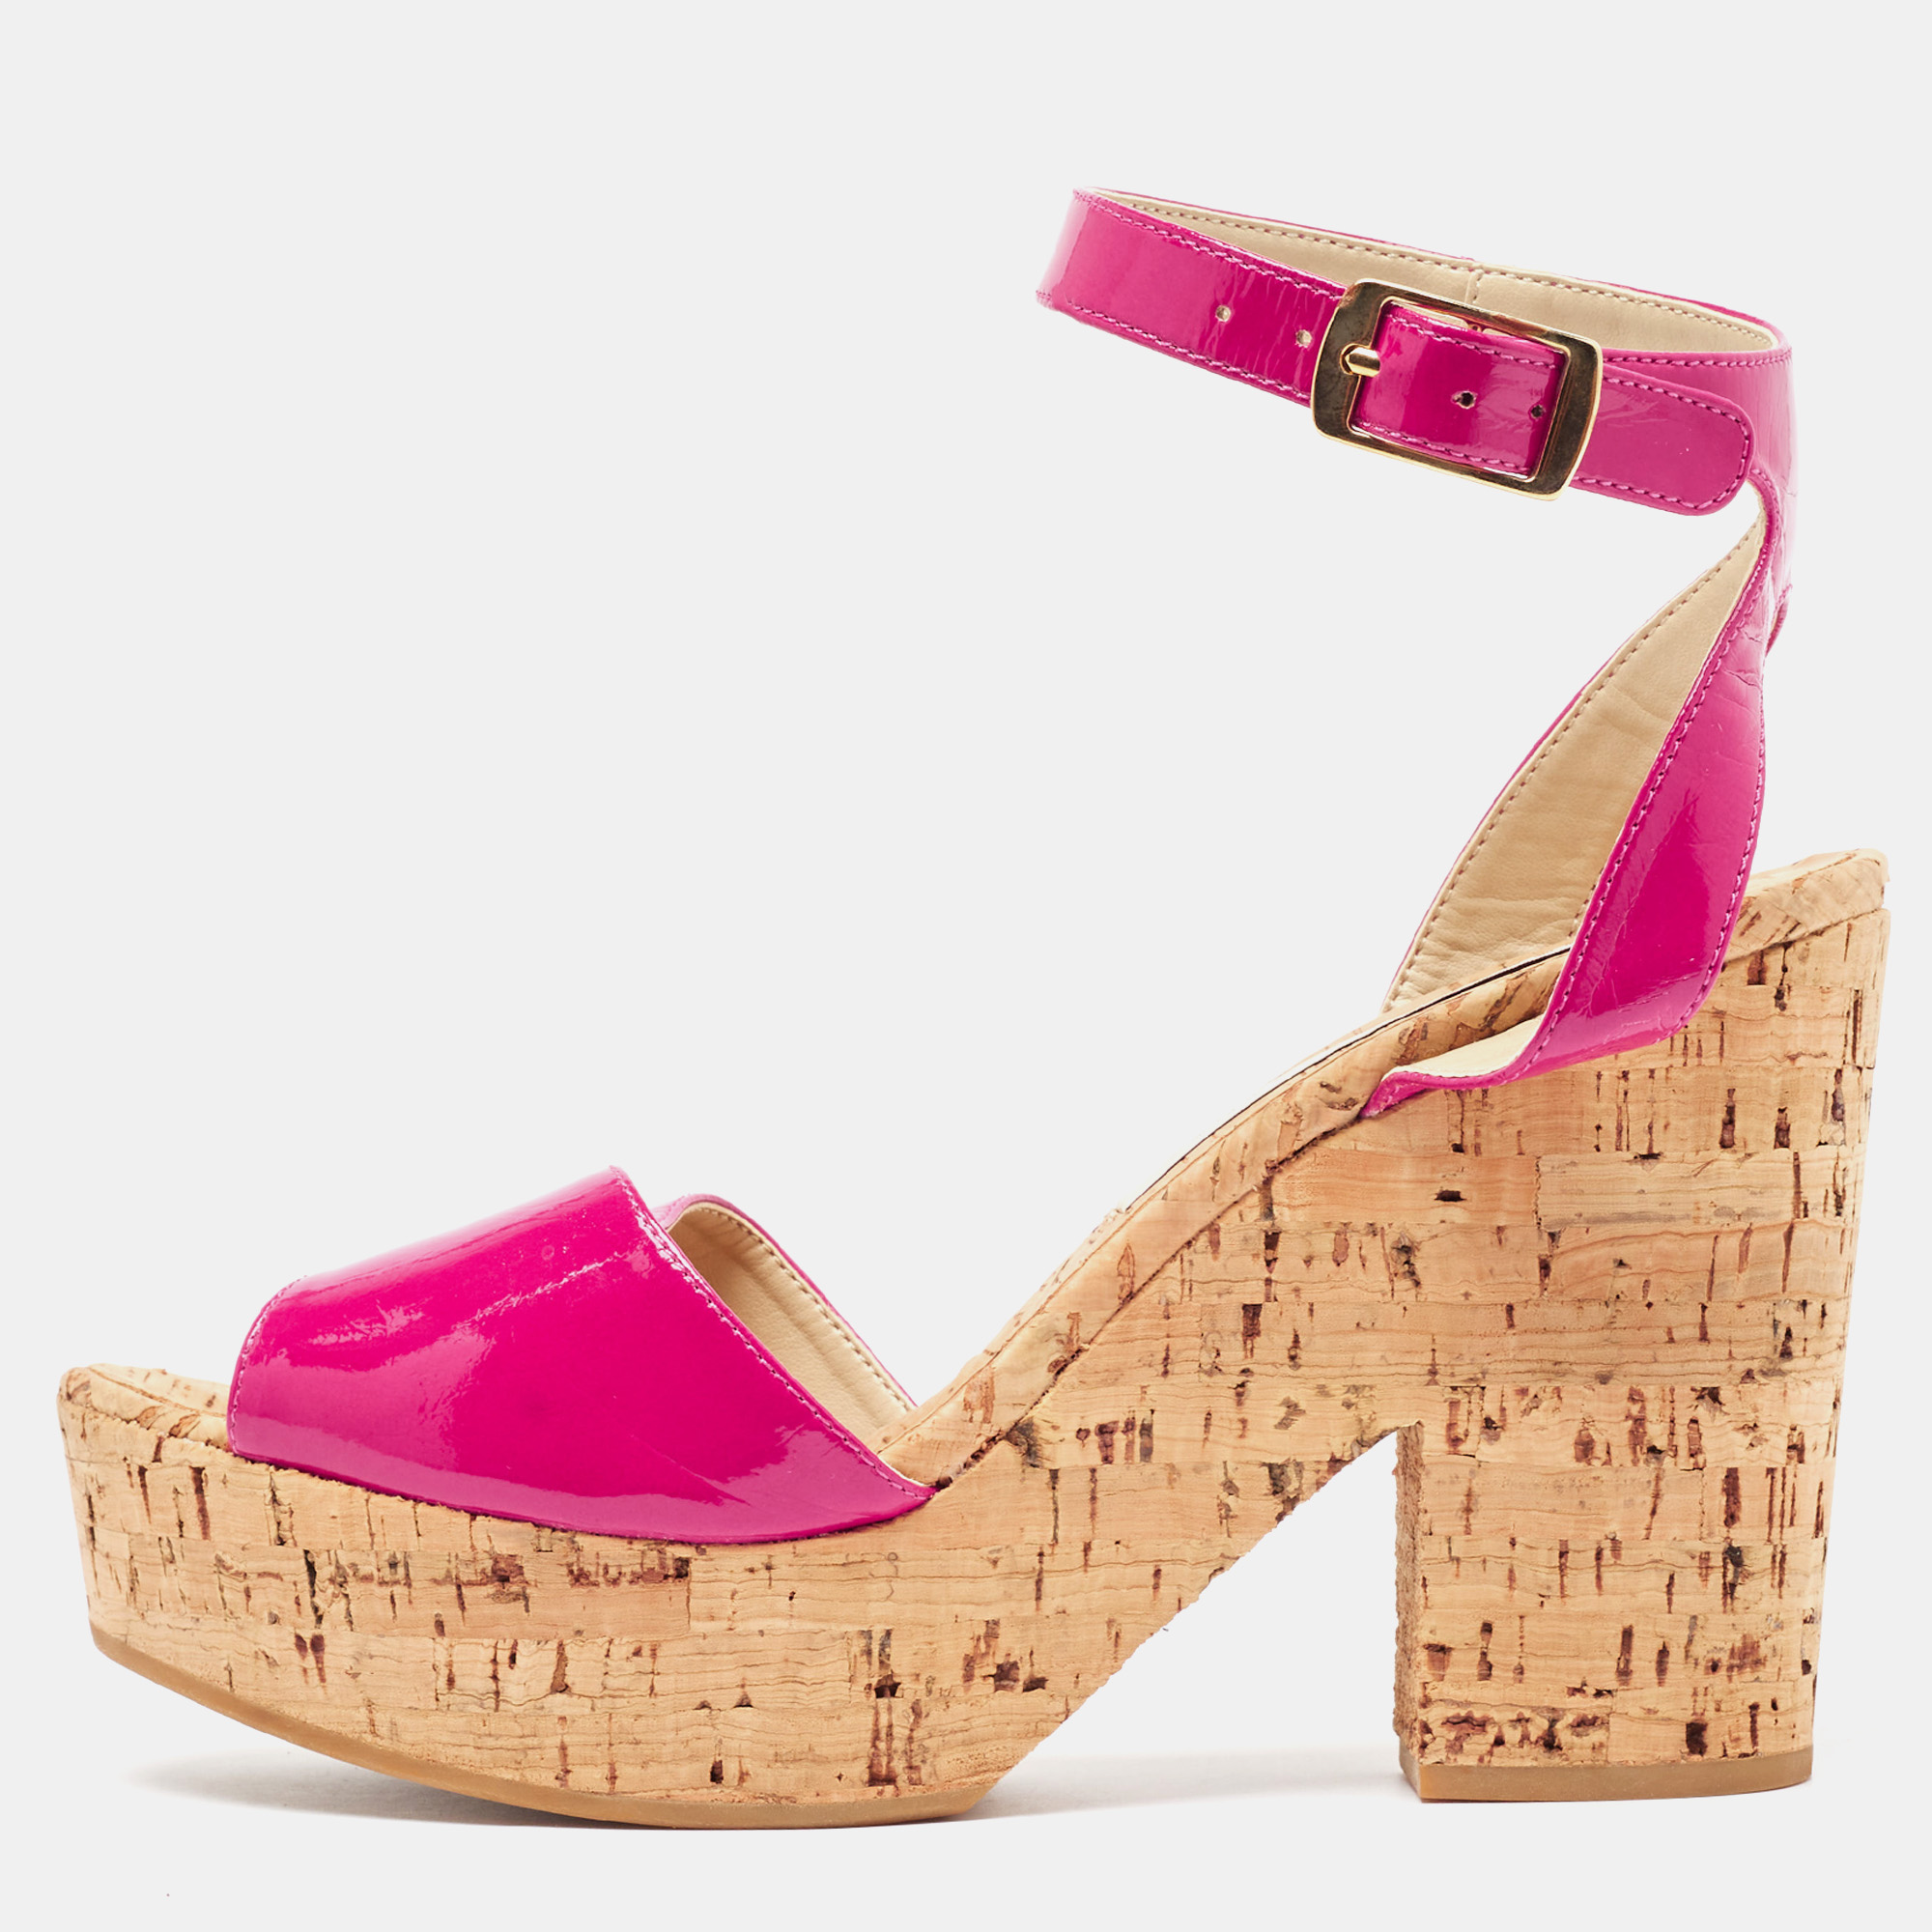 Stella mccartney pink faux patent and cork platform ankle strap sandals size 39